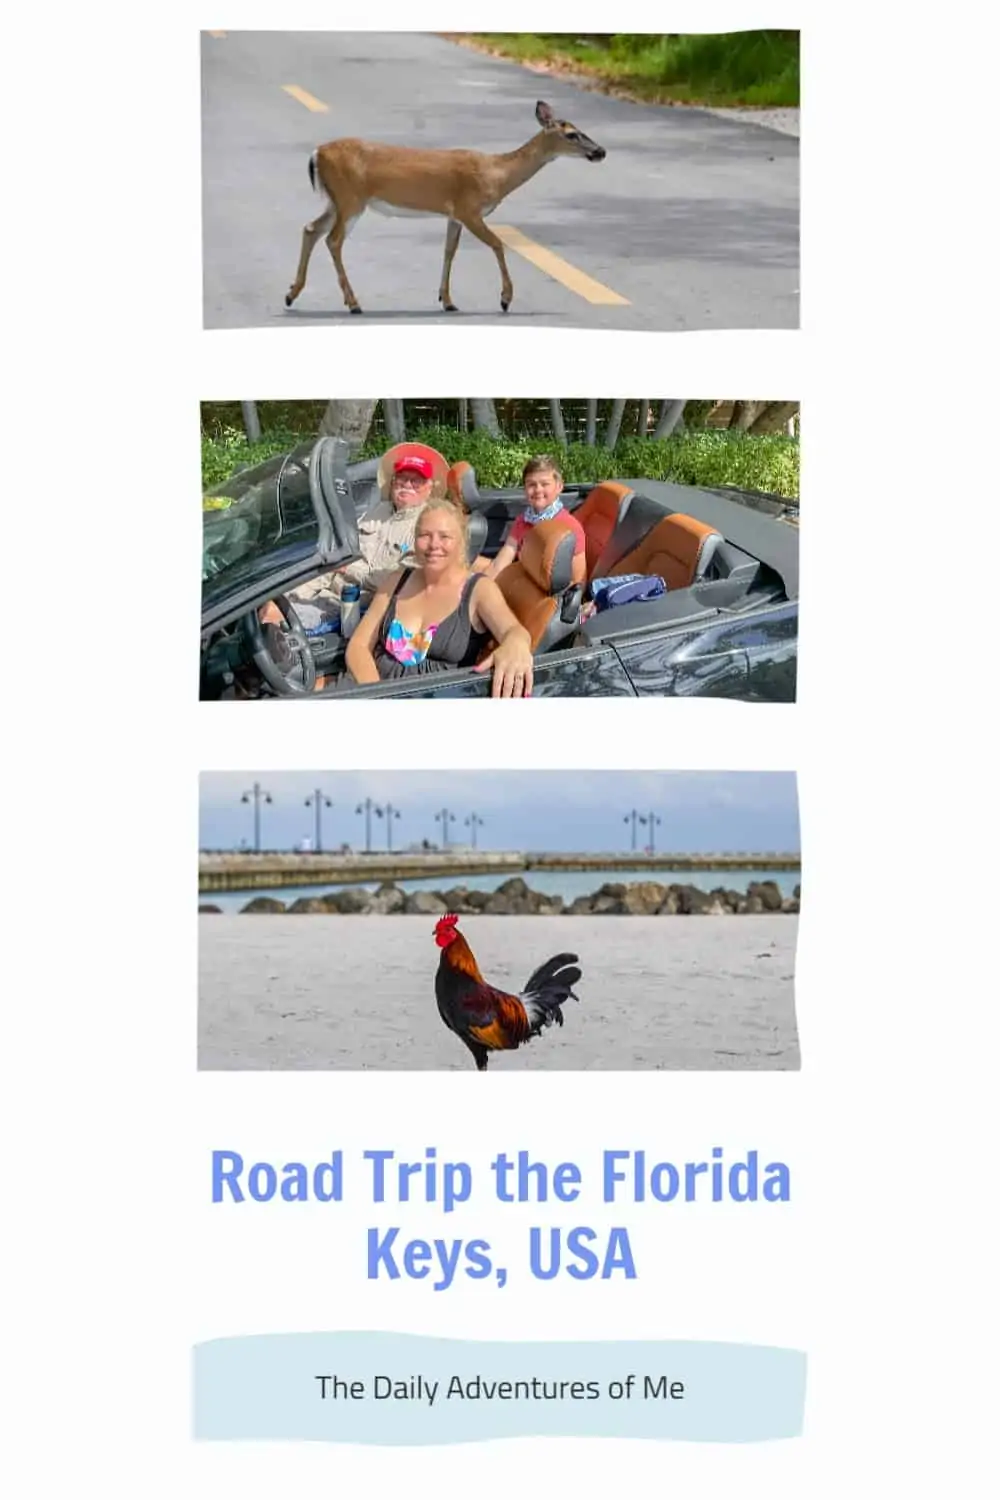 Road trip the Florida Keys and discover the history, coral reefs, wildlife, boating and food. #FloridaKeys #Floridaroadtrip #visitFlorida